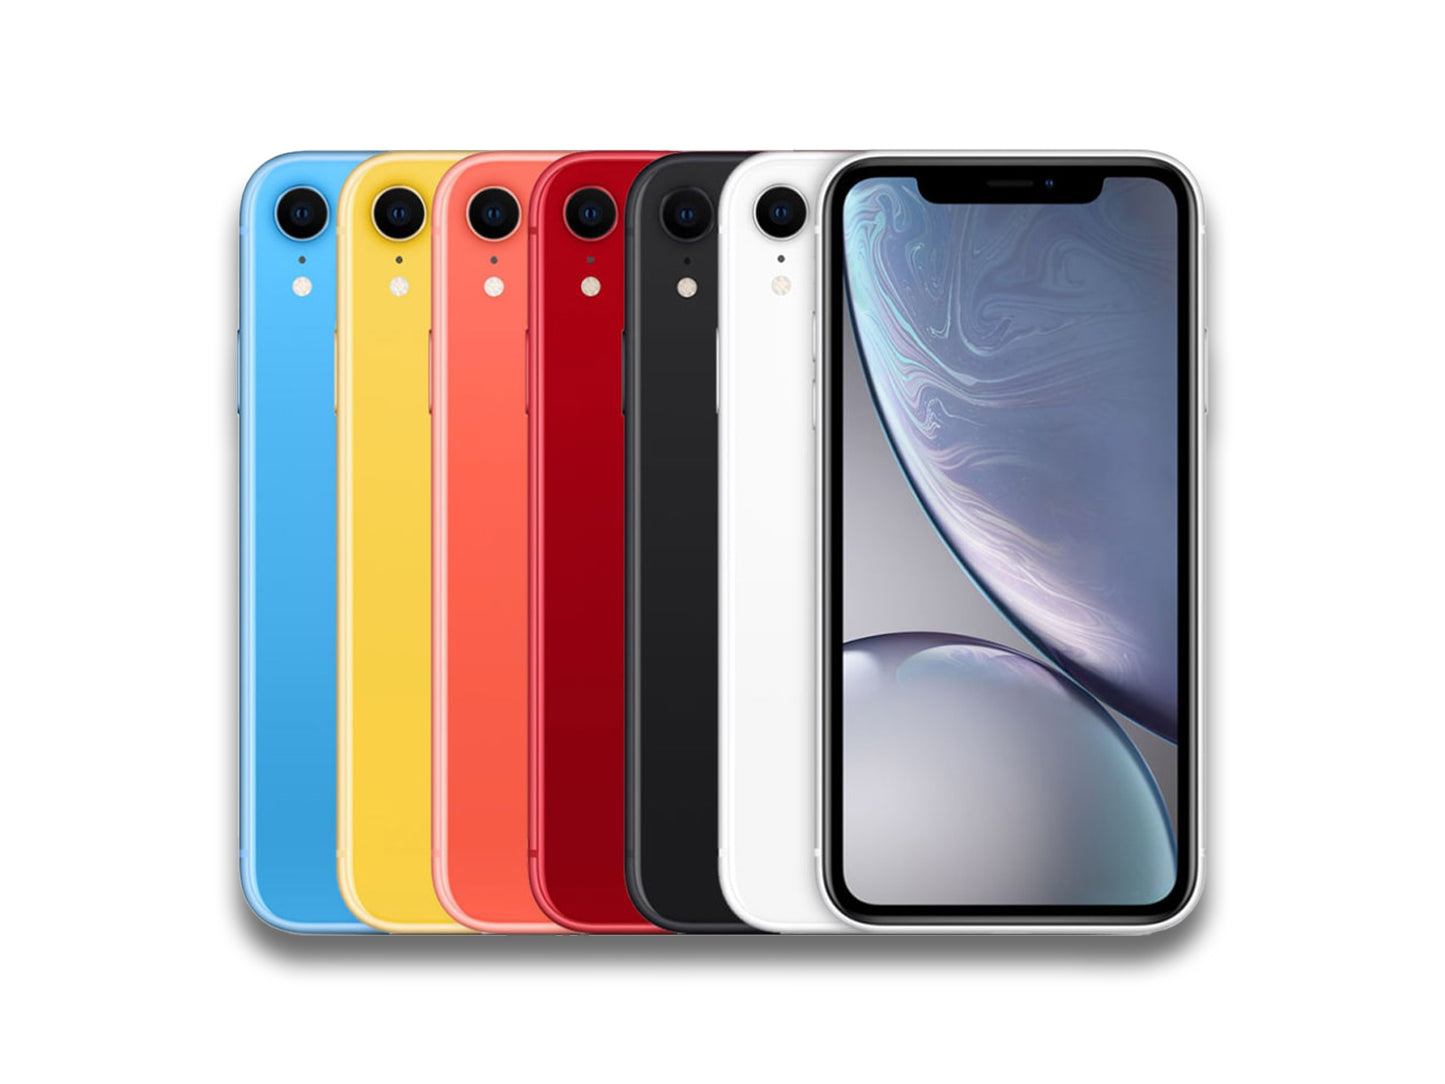 Apple iPhone XR All Colour Variants 